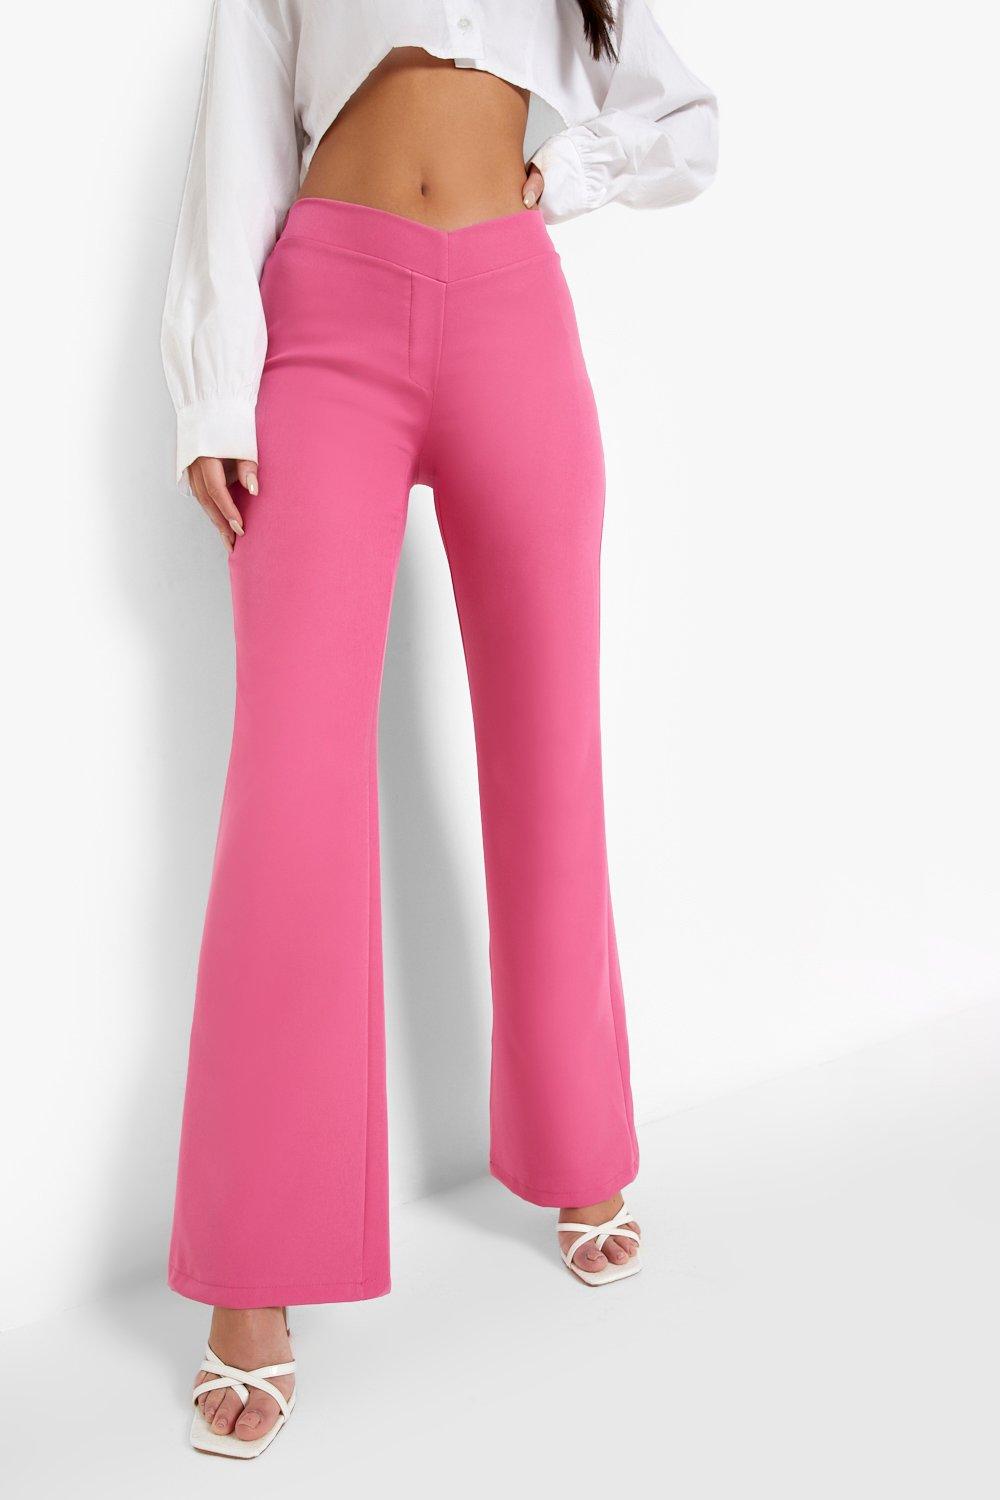 https://media.boohoo.com/i/boohoo/gzz01087_pink_xl_3/female-pink-low-waist-v-shape-flared-pants